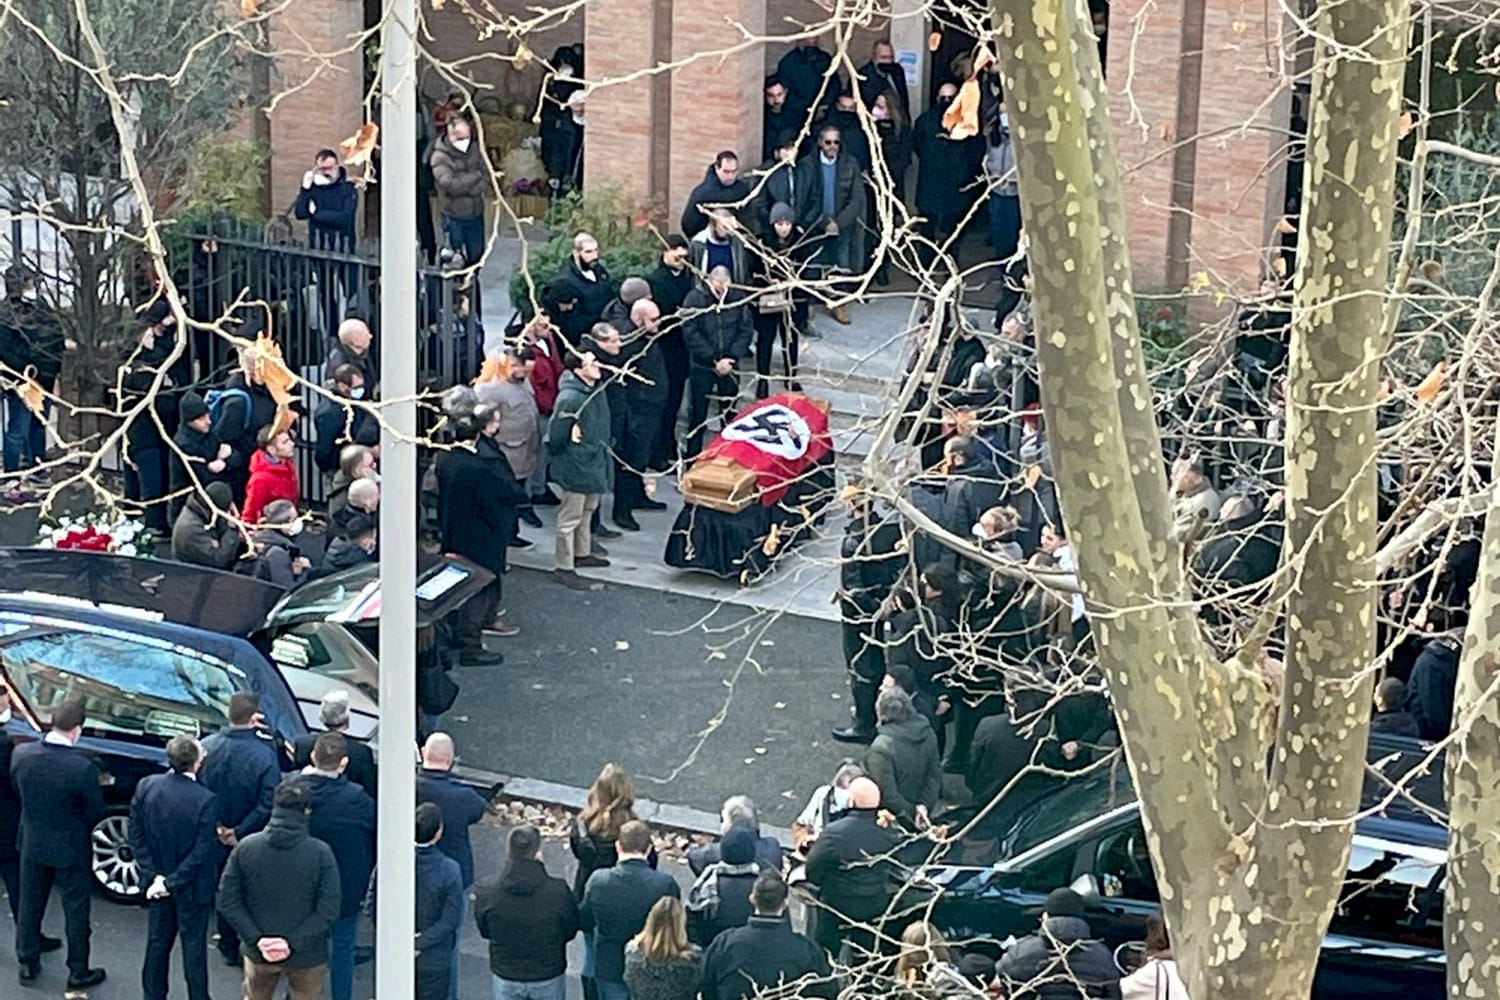 Catholic, Jewish leaders condemn Nazi flag on coffin at Italian church funeral